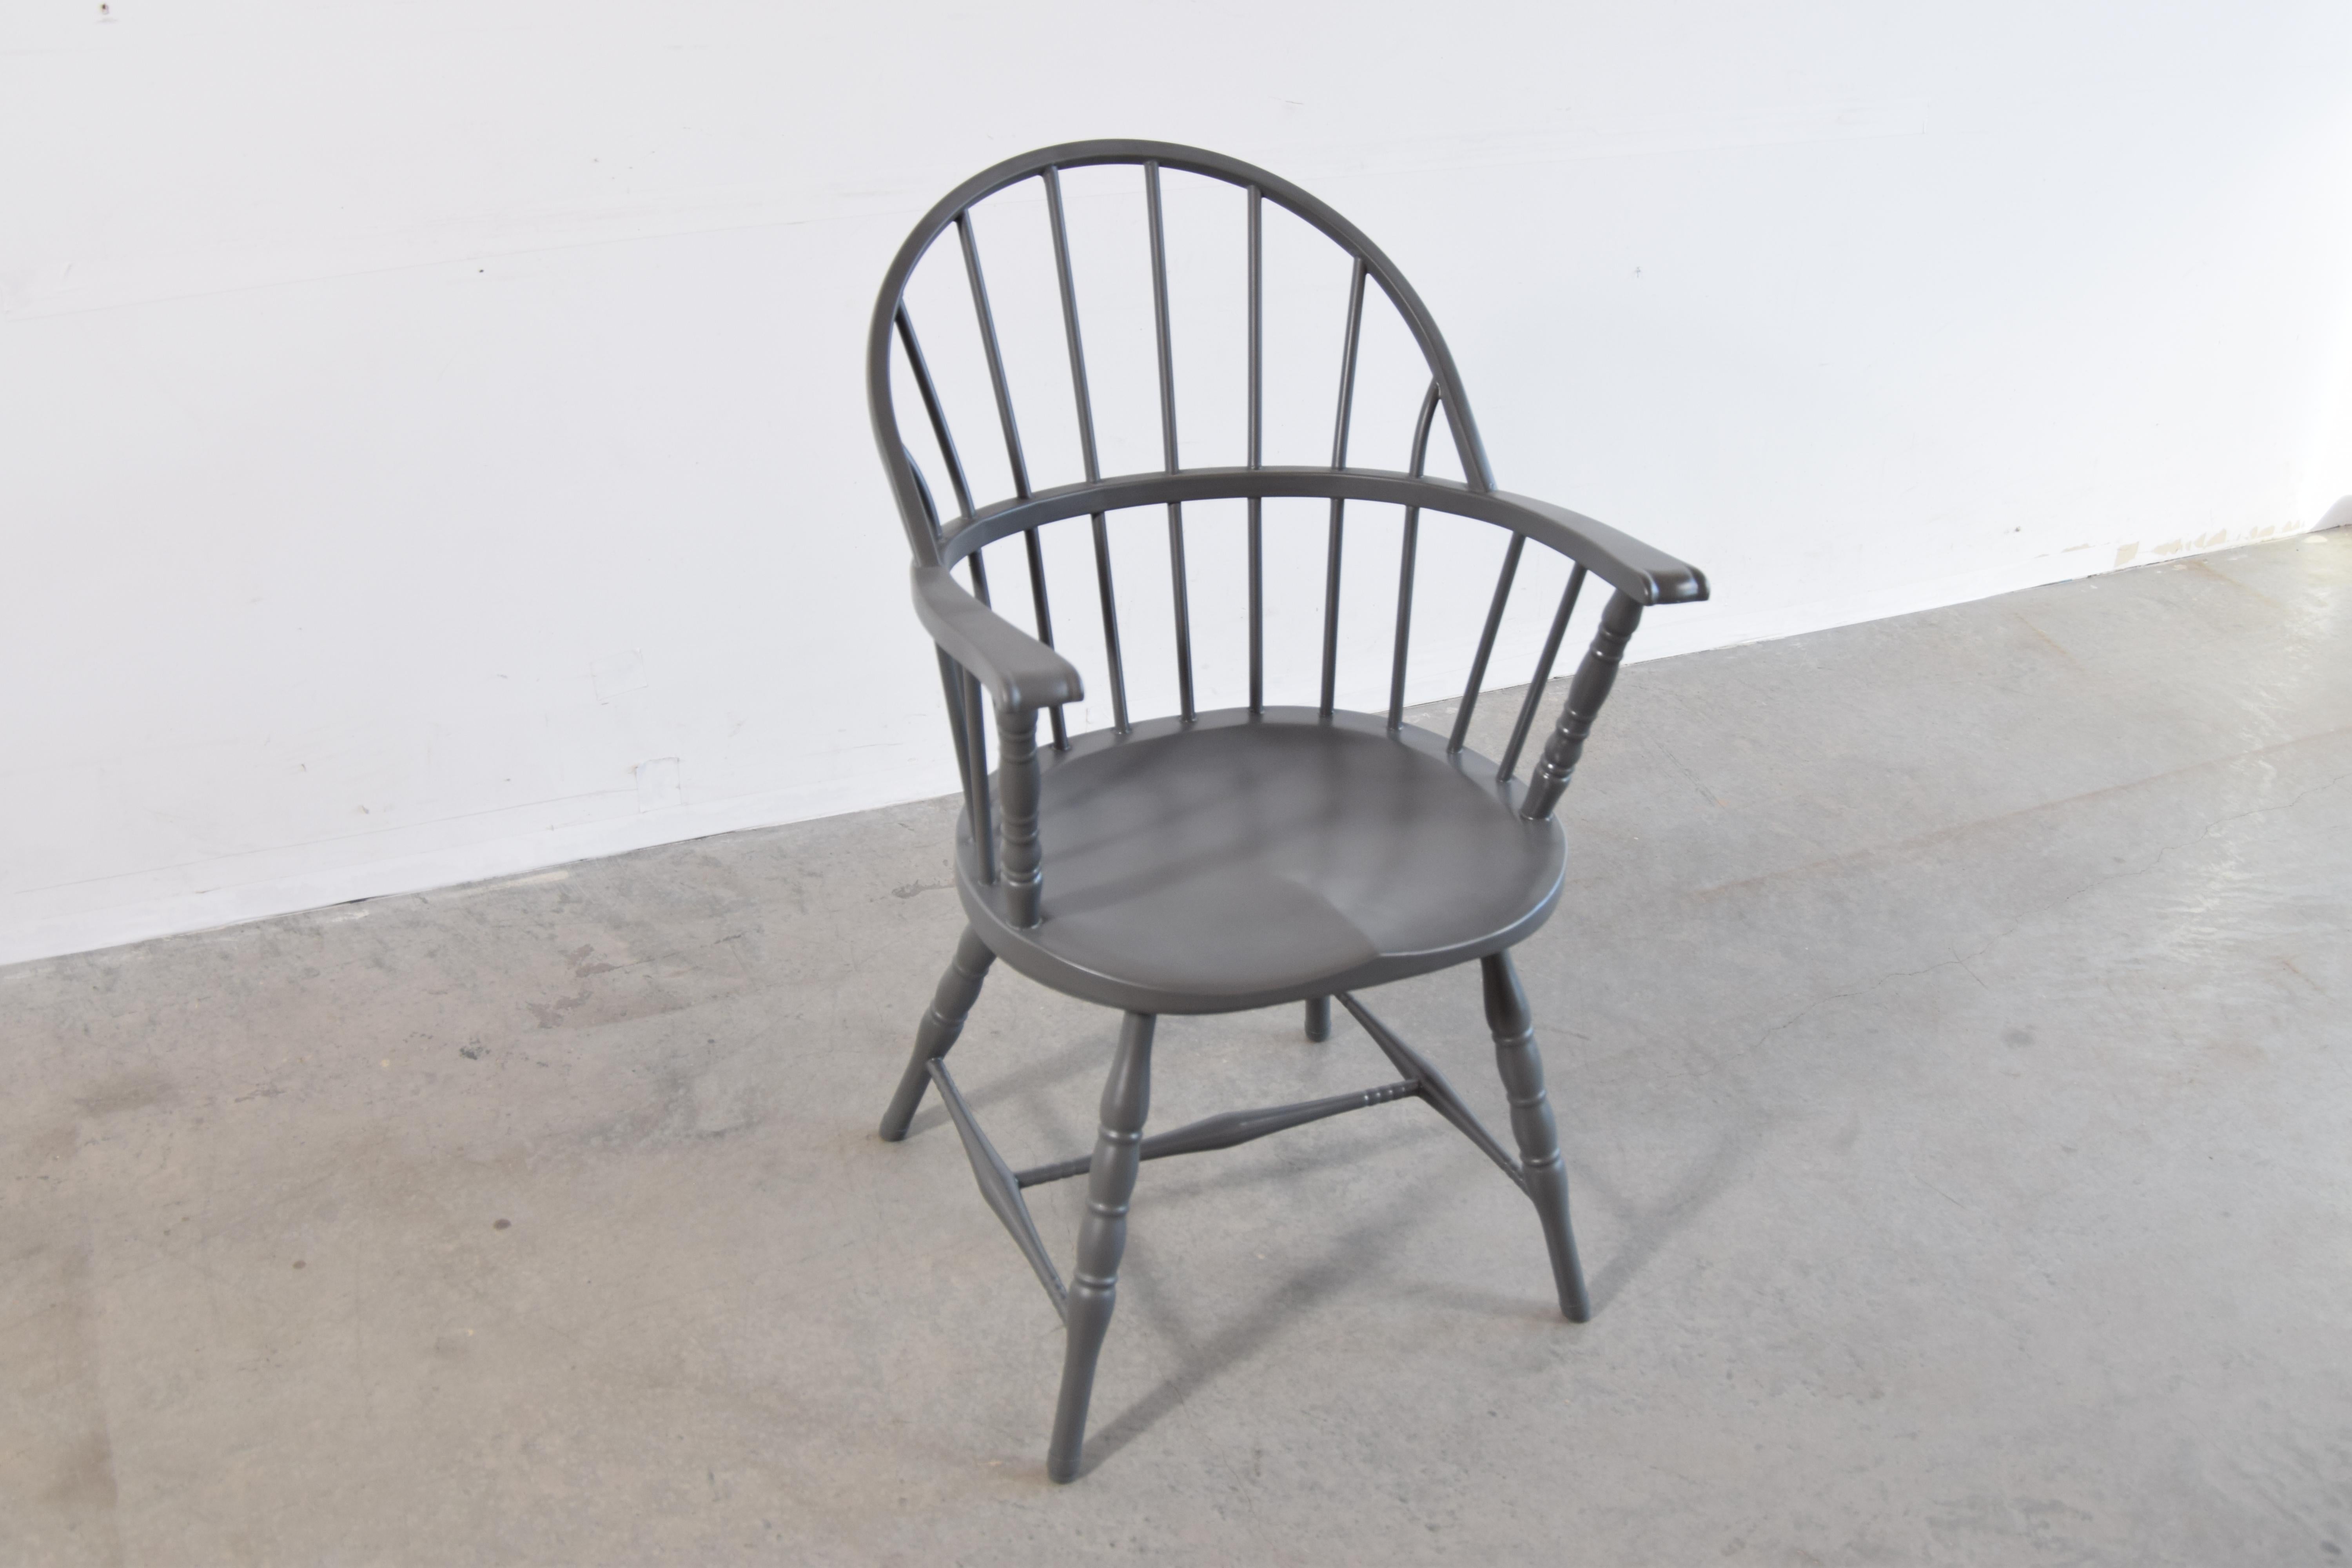 American Steel Windsor Chair For Sale